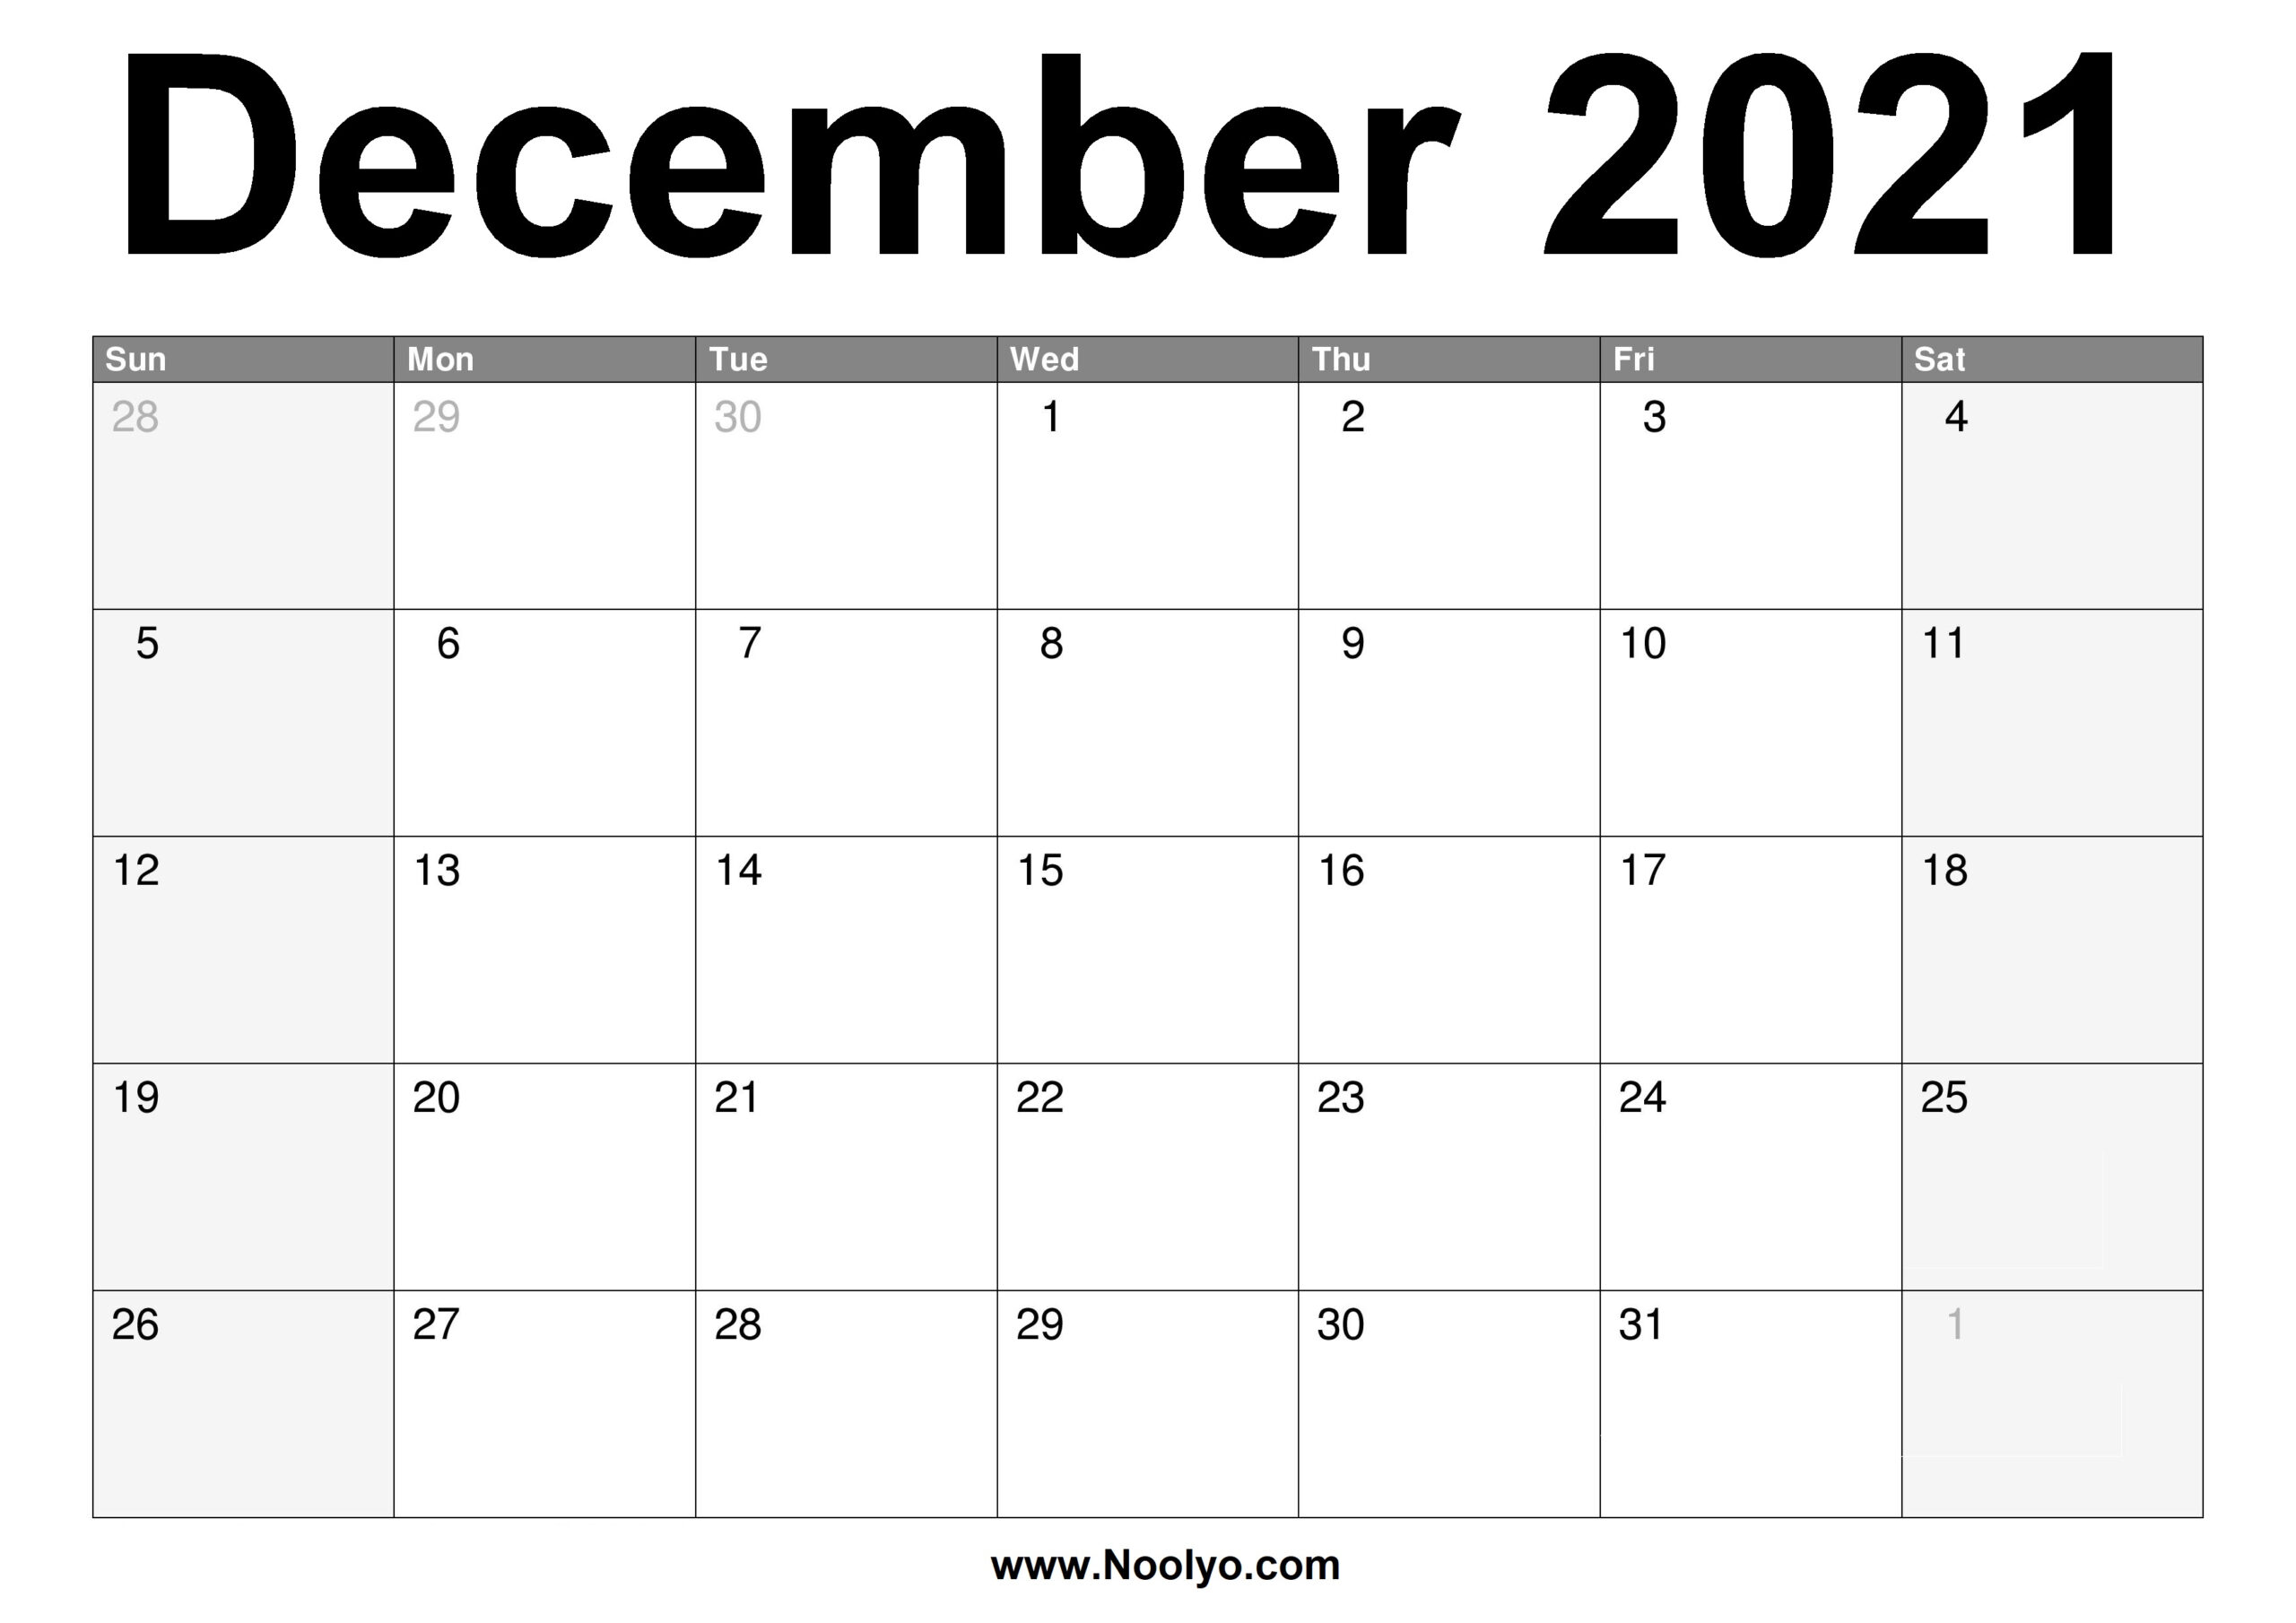 December 2021 Calendar Printable – Free Download – Noolyo